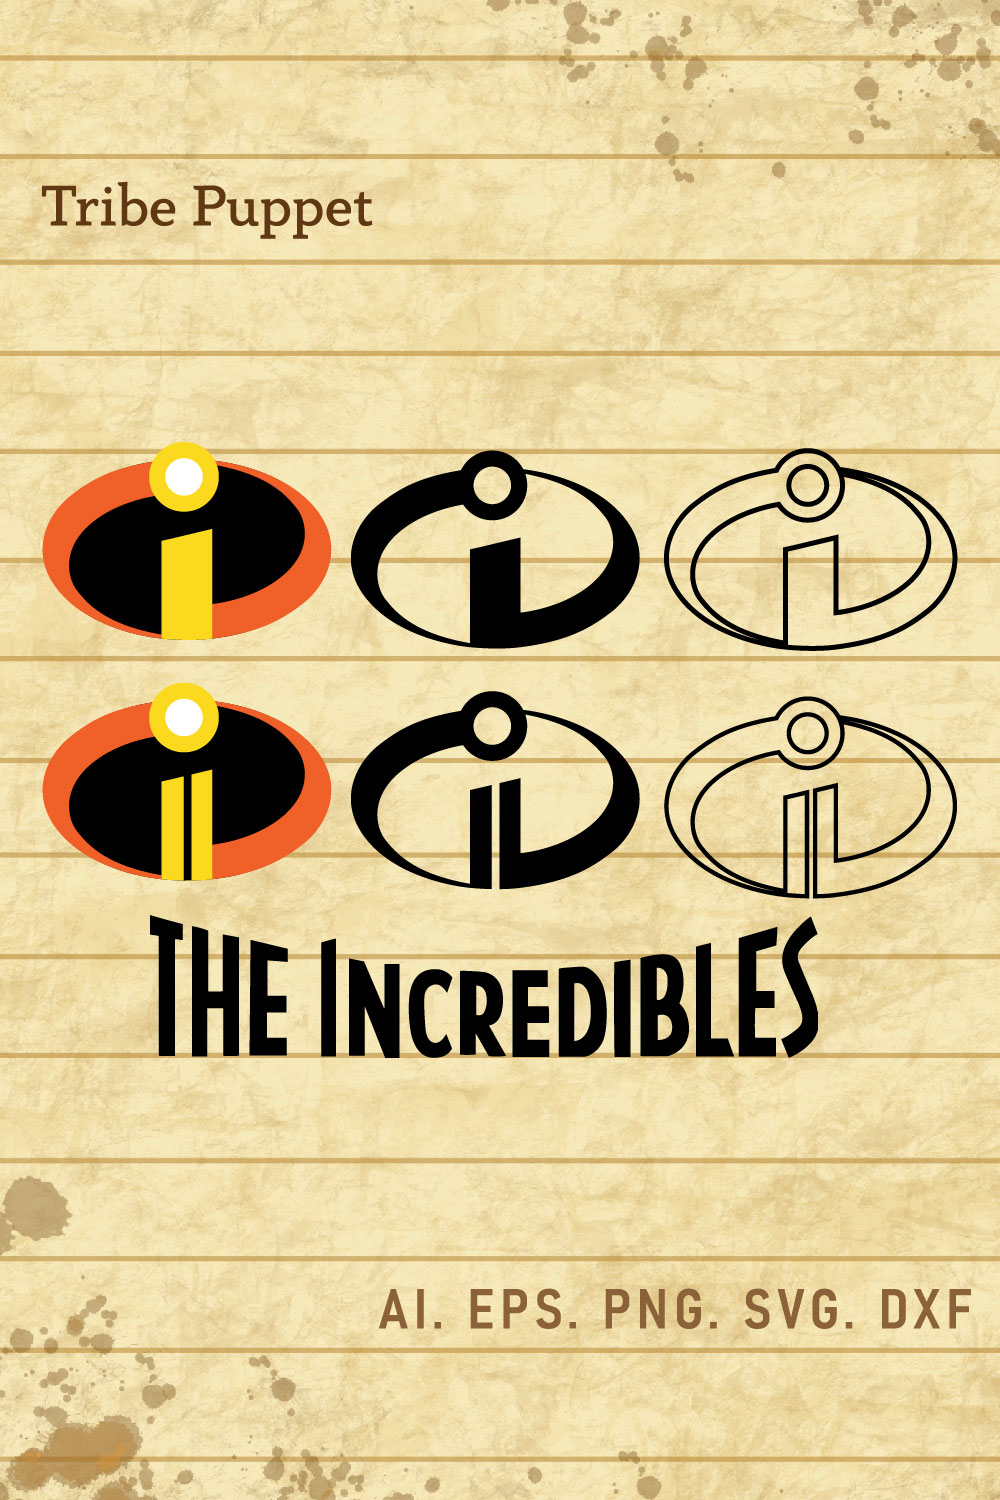 The Incredibles Symbols Logo Set pinterest preview image.